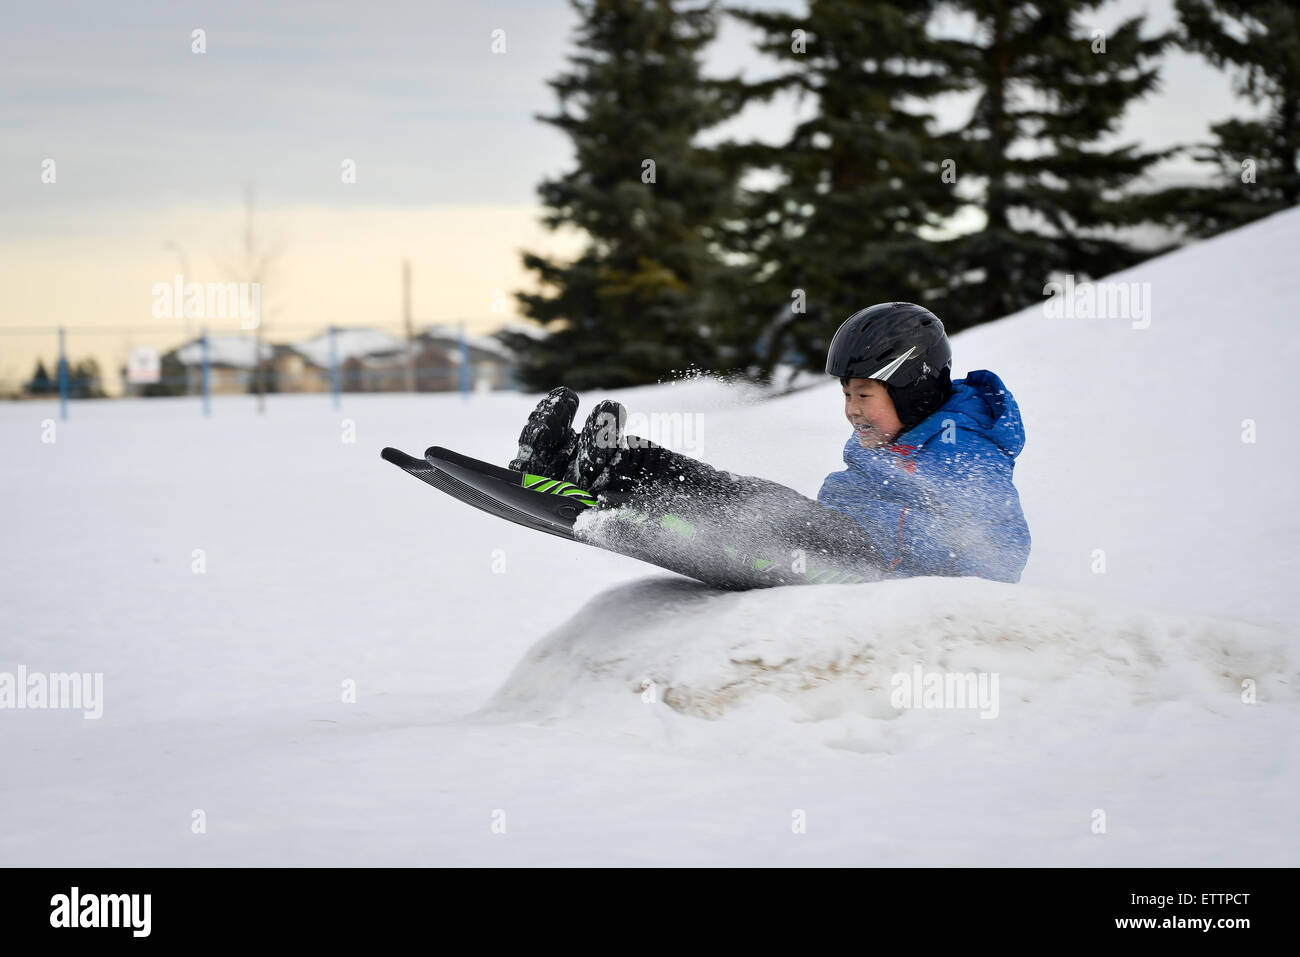 Winter Fun - Child Sledding/Tobogganing Fast Over Snow Ramp Stock Photo